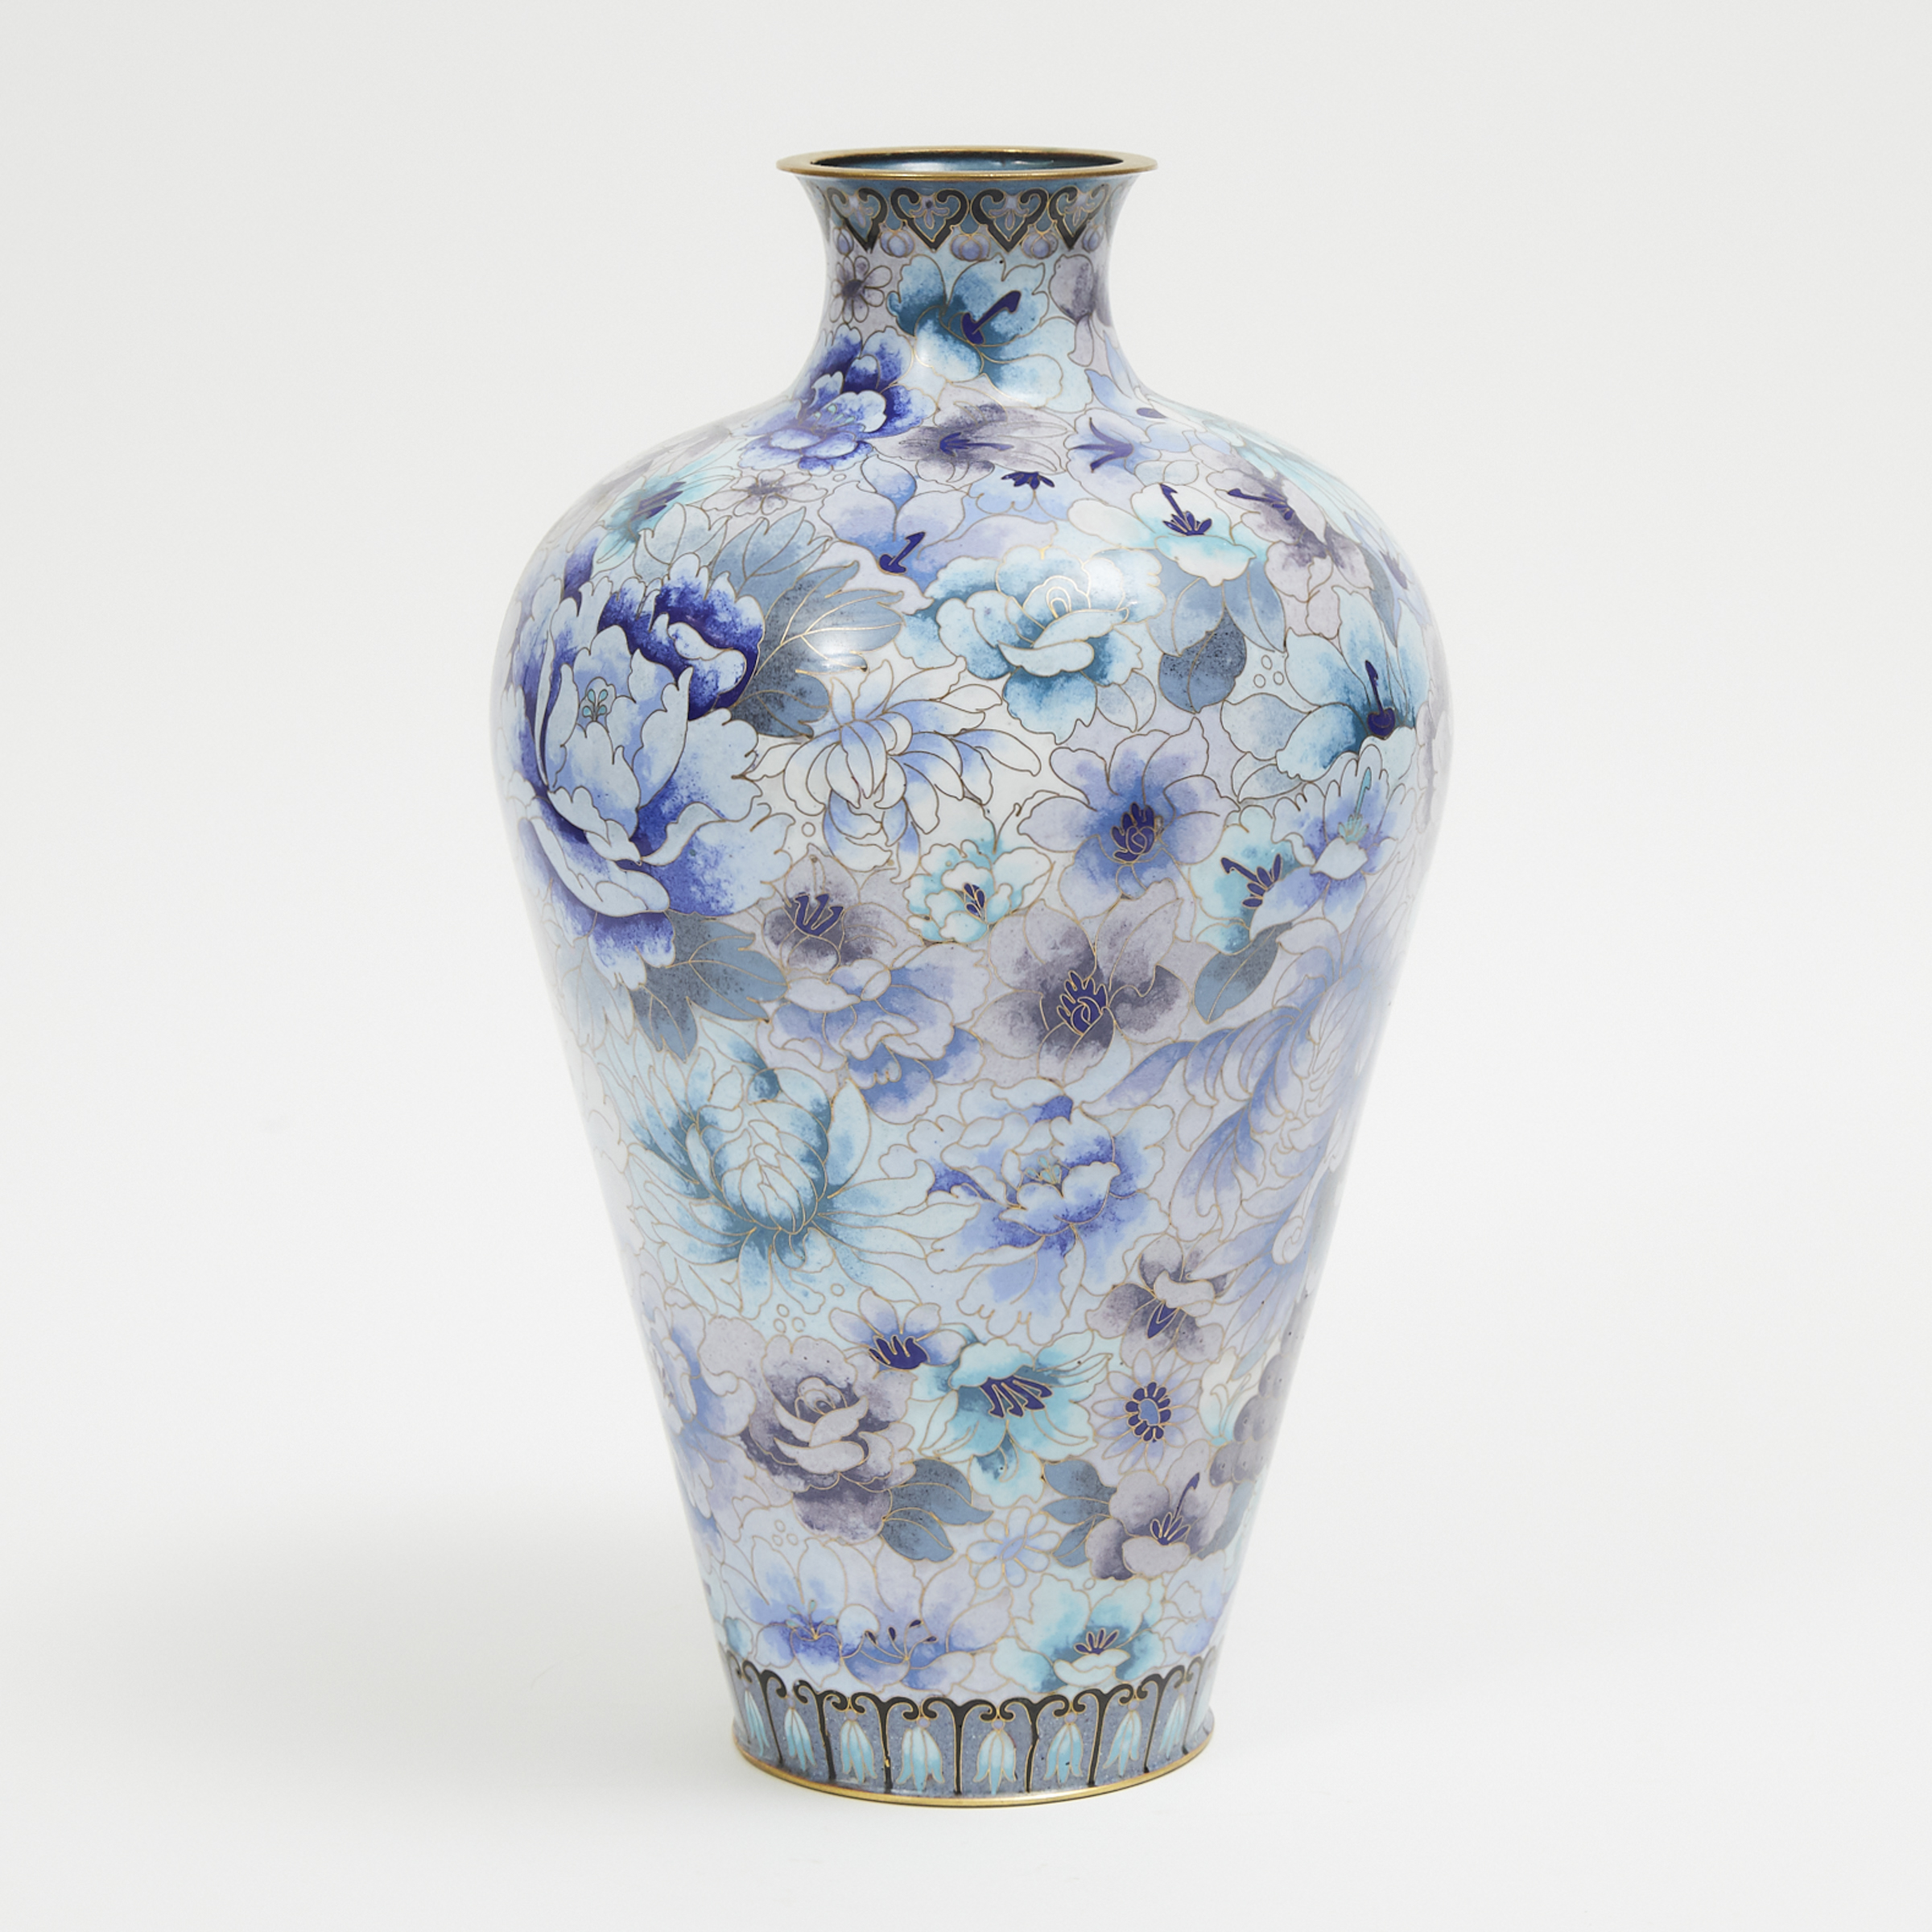 A Large Floral Cloisonné Meiping Vase